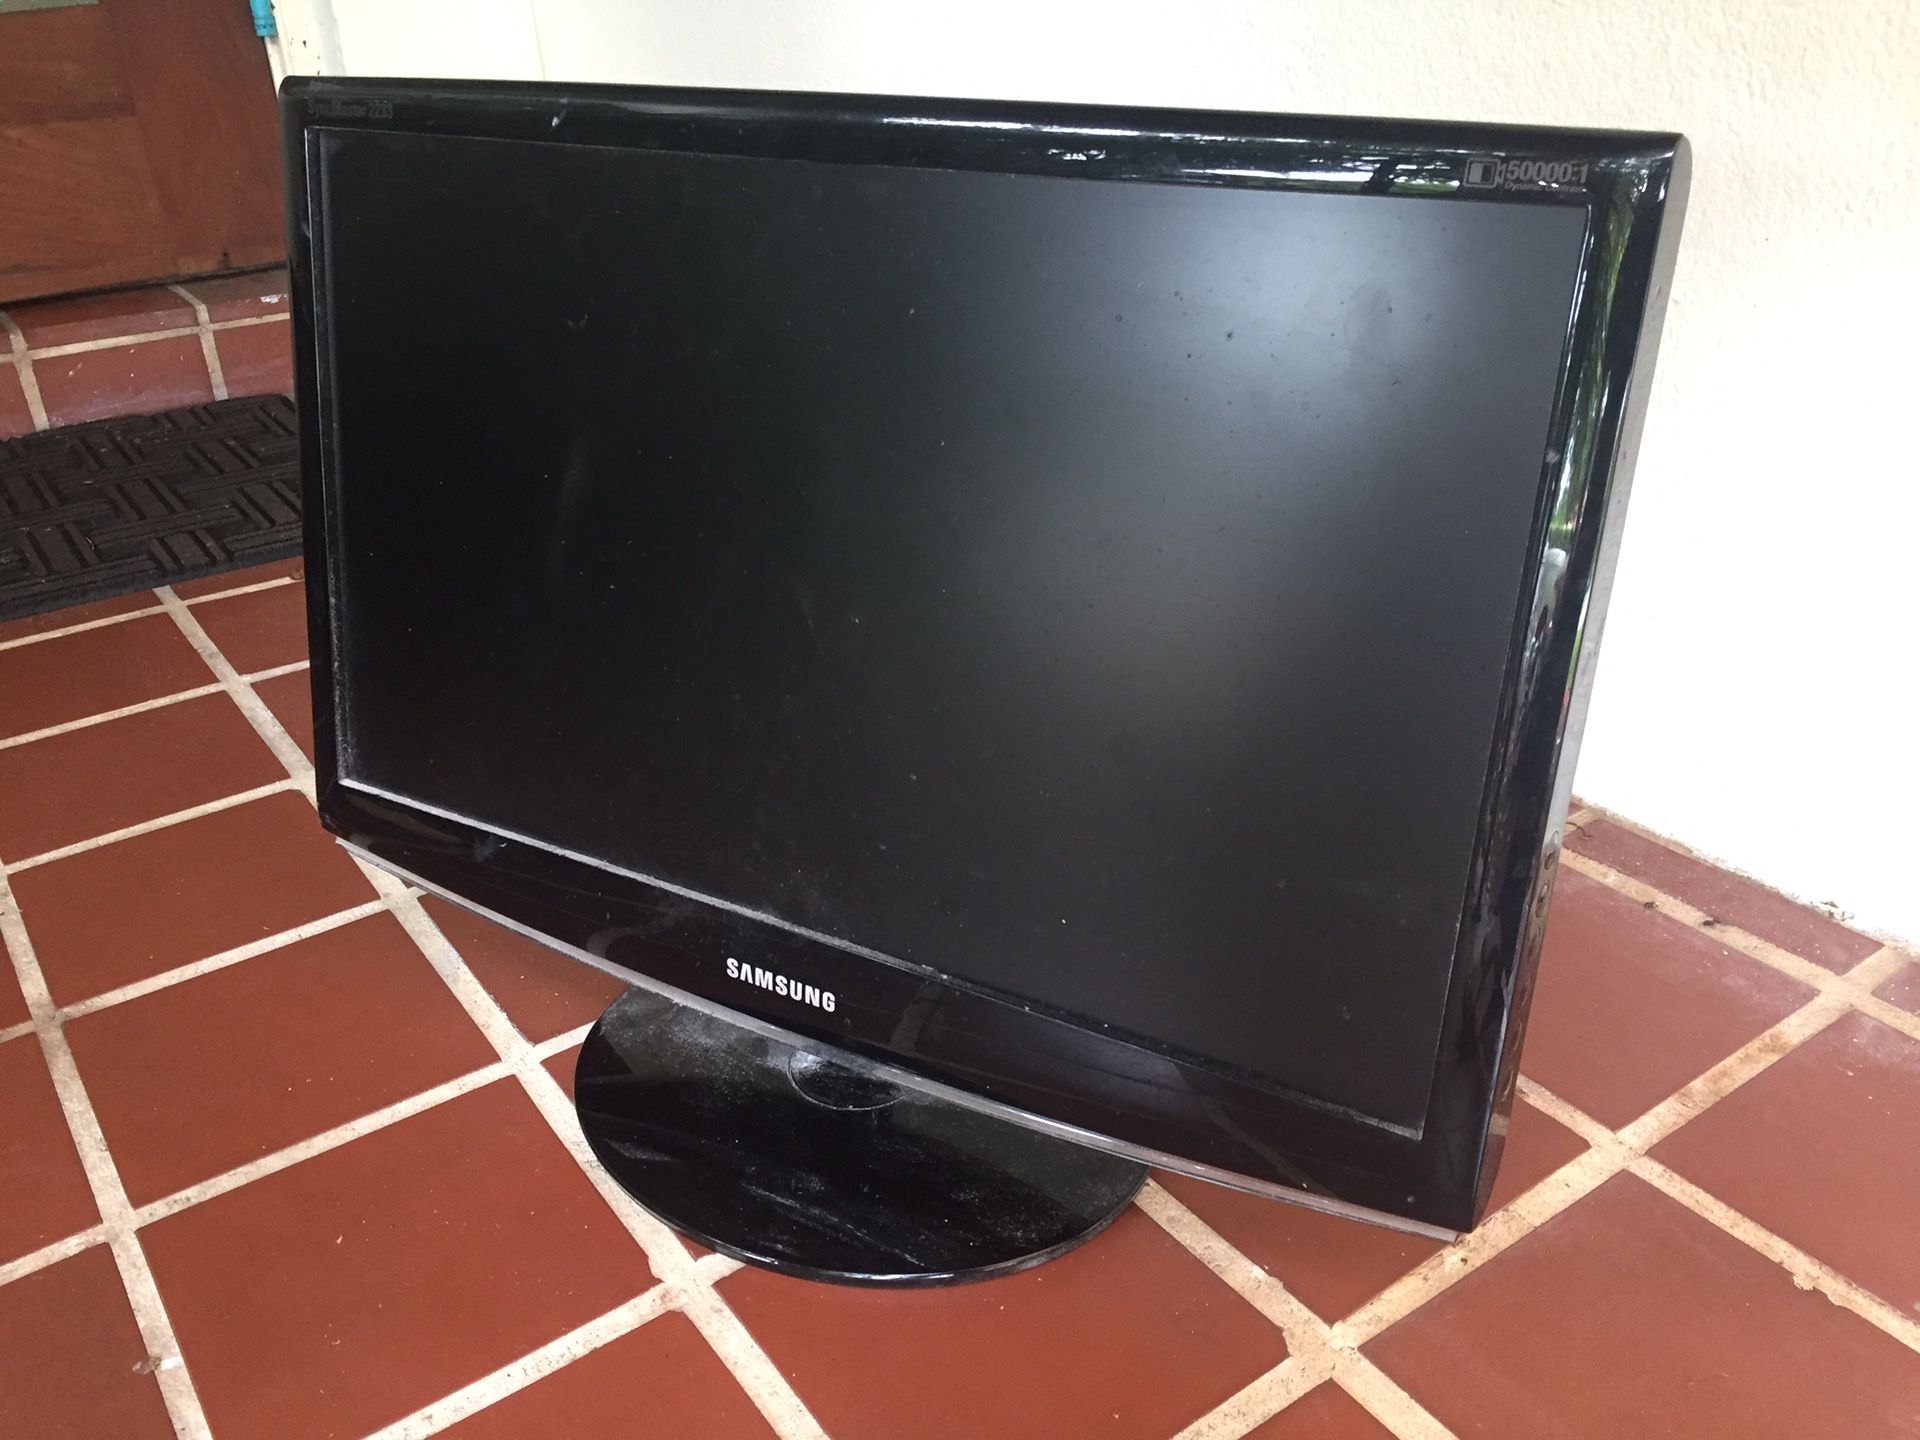 Samsung 2233SW 22” computer monitor